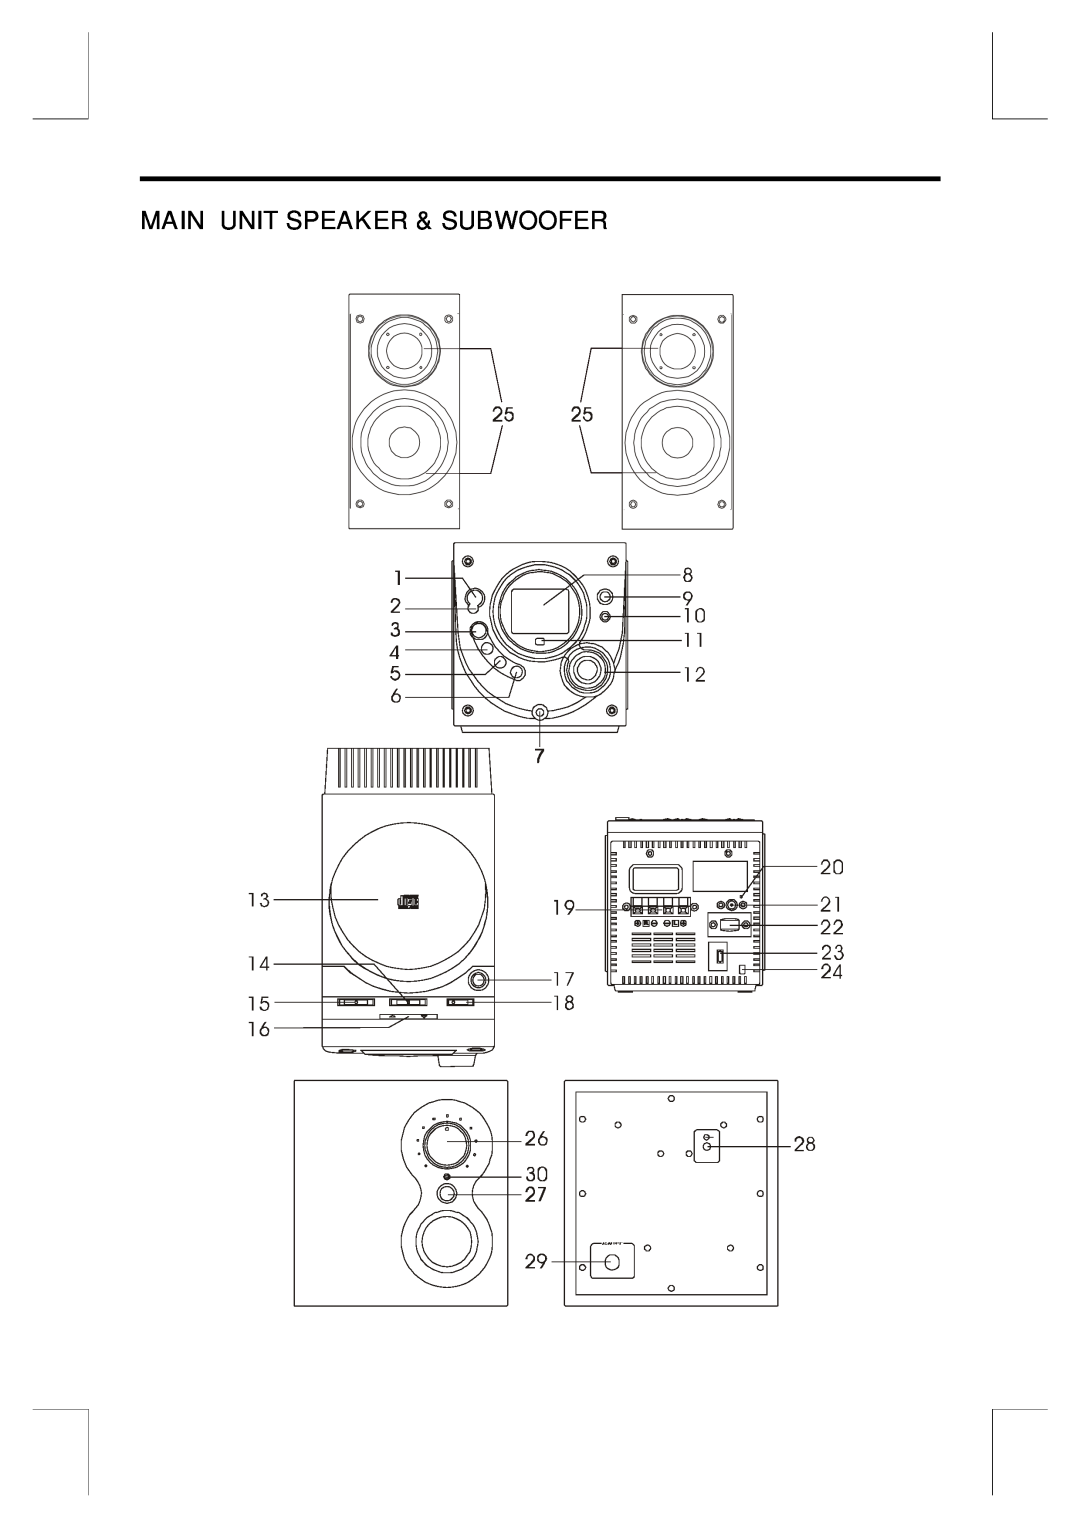 Sylvania SR-748 instruction manual Main Unit Speaker & Subwoofer 